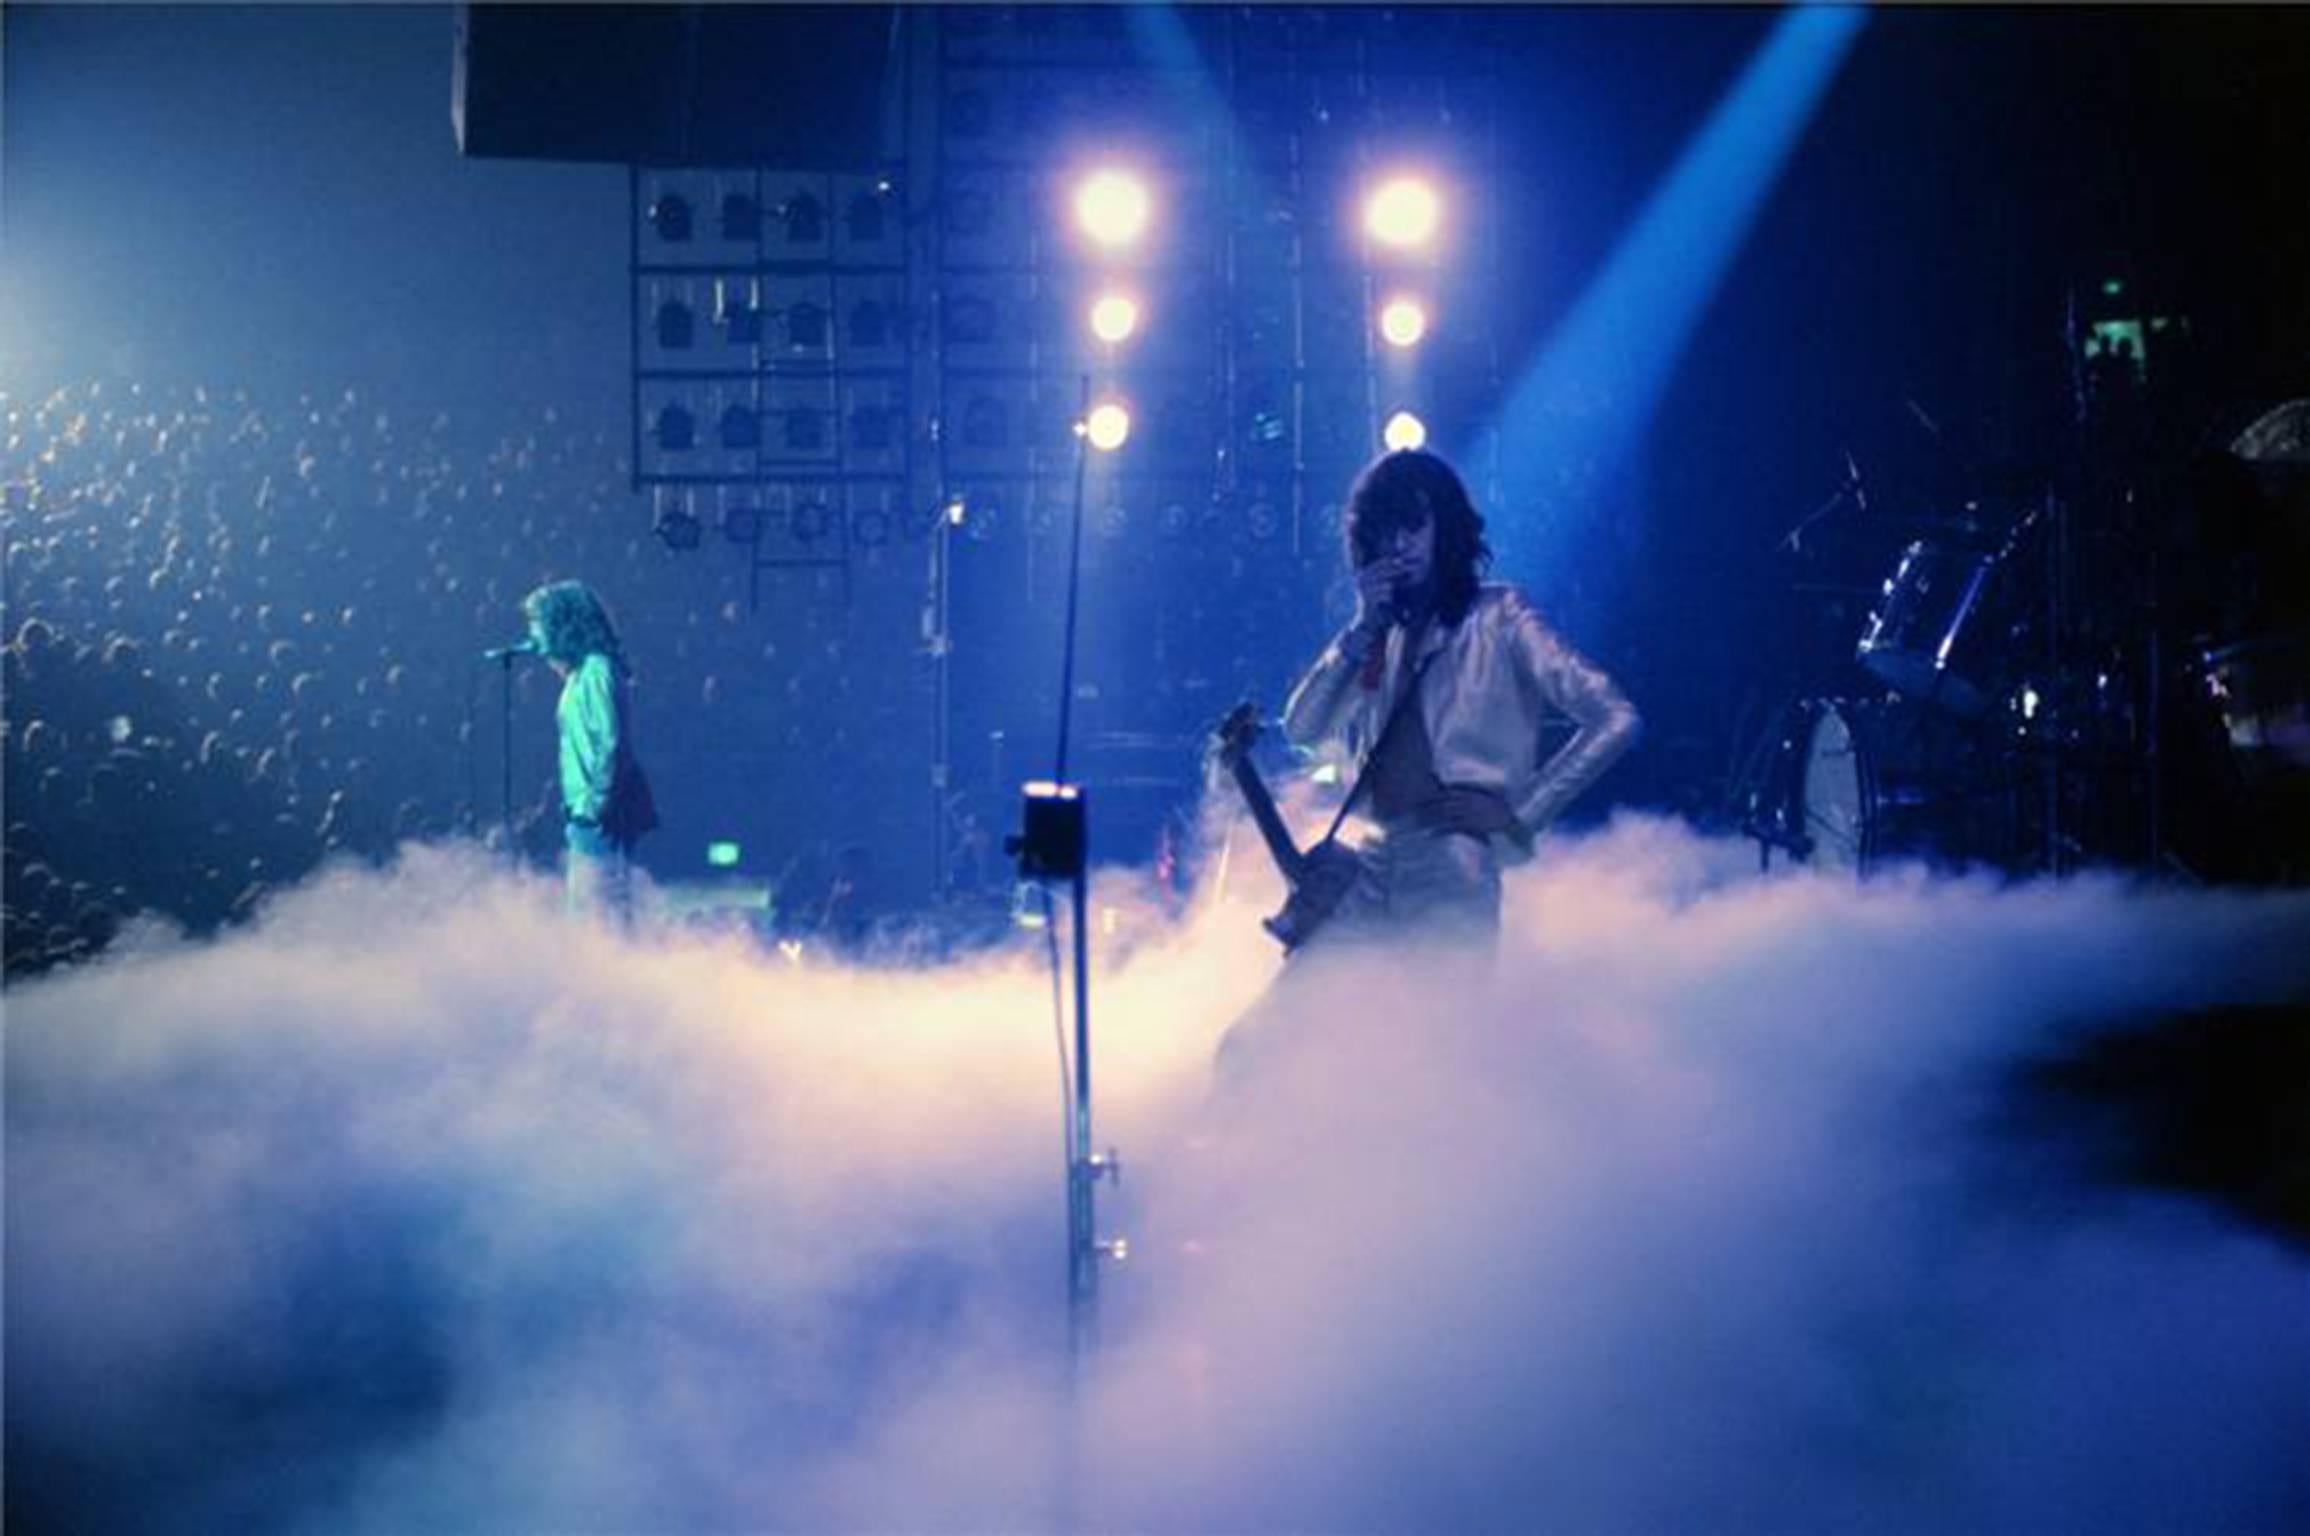 Neal Preston Color Photograph - Led Zeppelin 1977